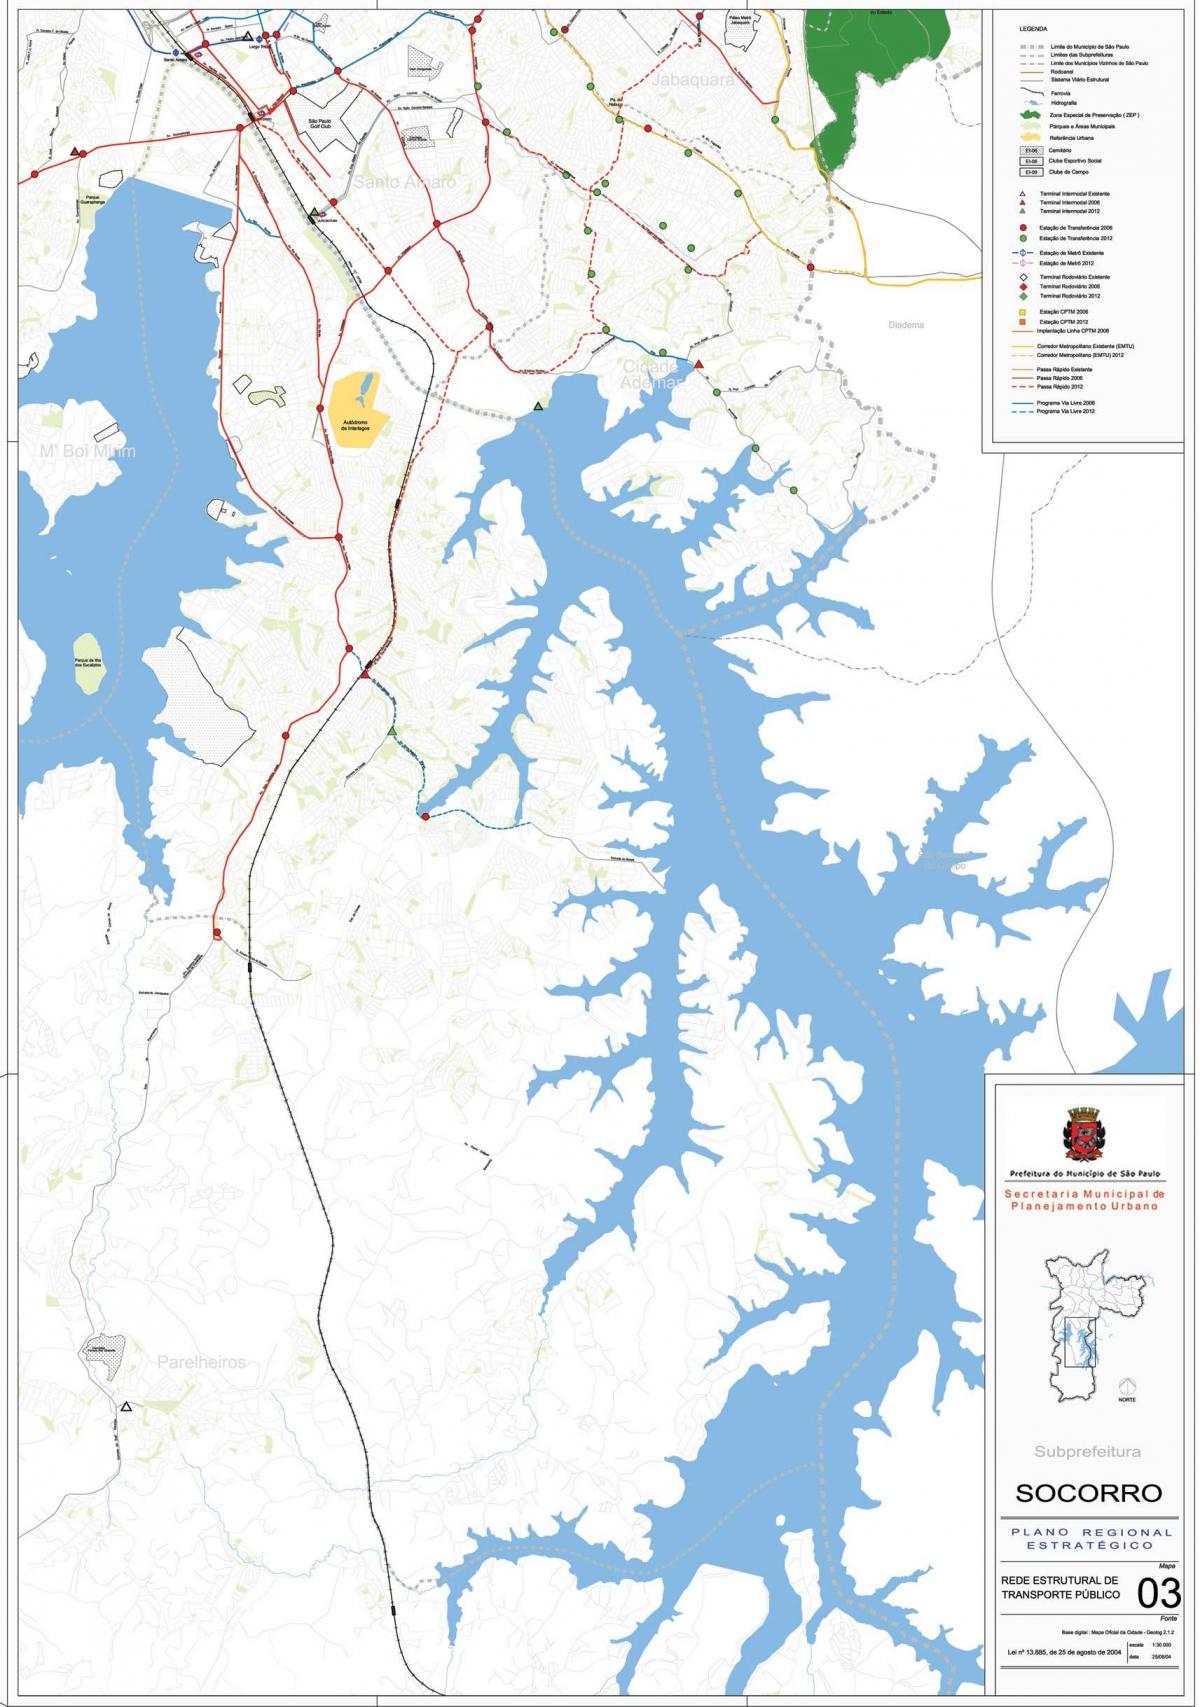 Kaart van Capela do Socorro São Paulo - het Openbaar vervoer